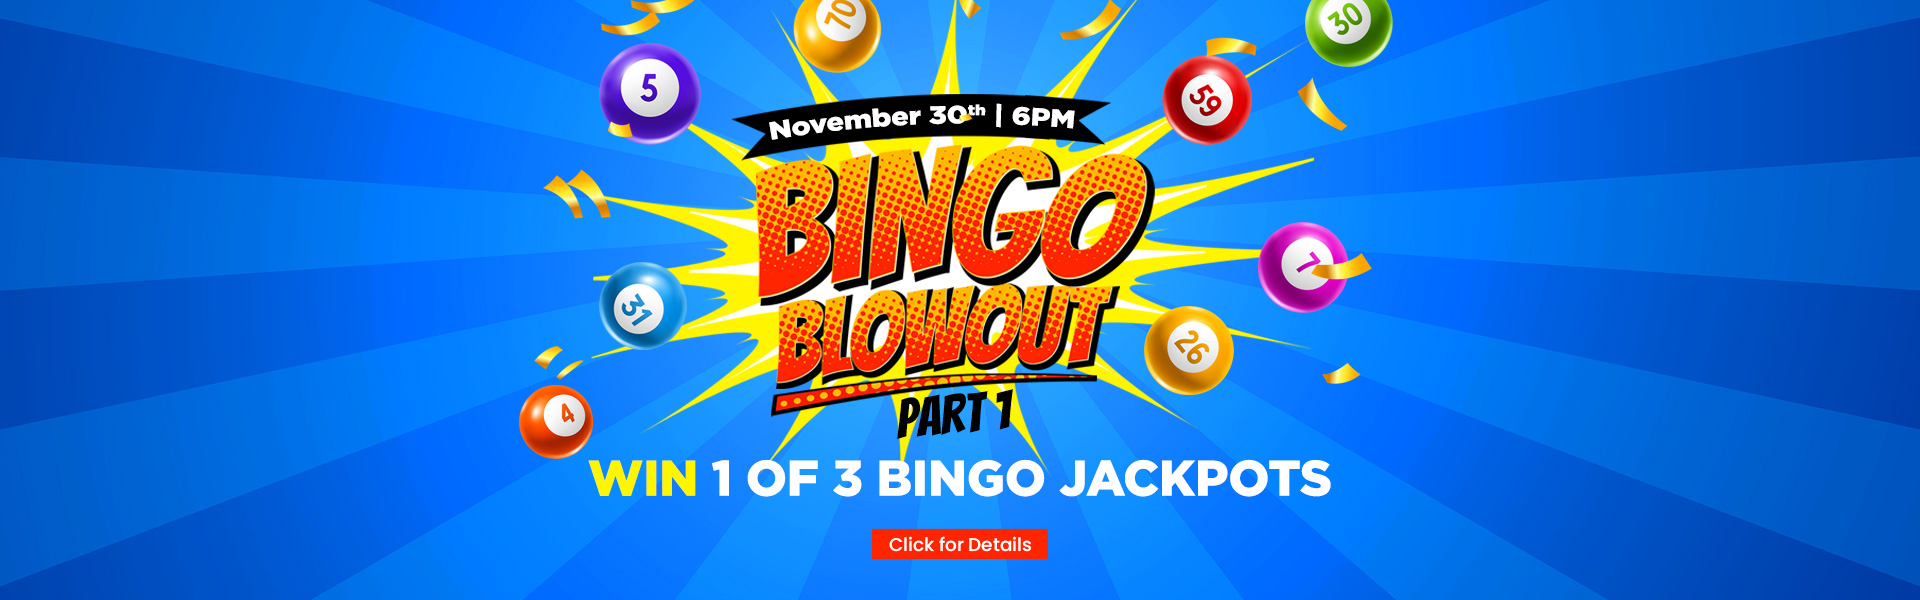 Bingo-Blowout-Website-Home-Banner